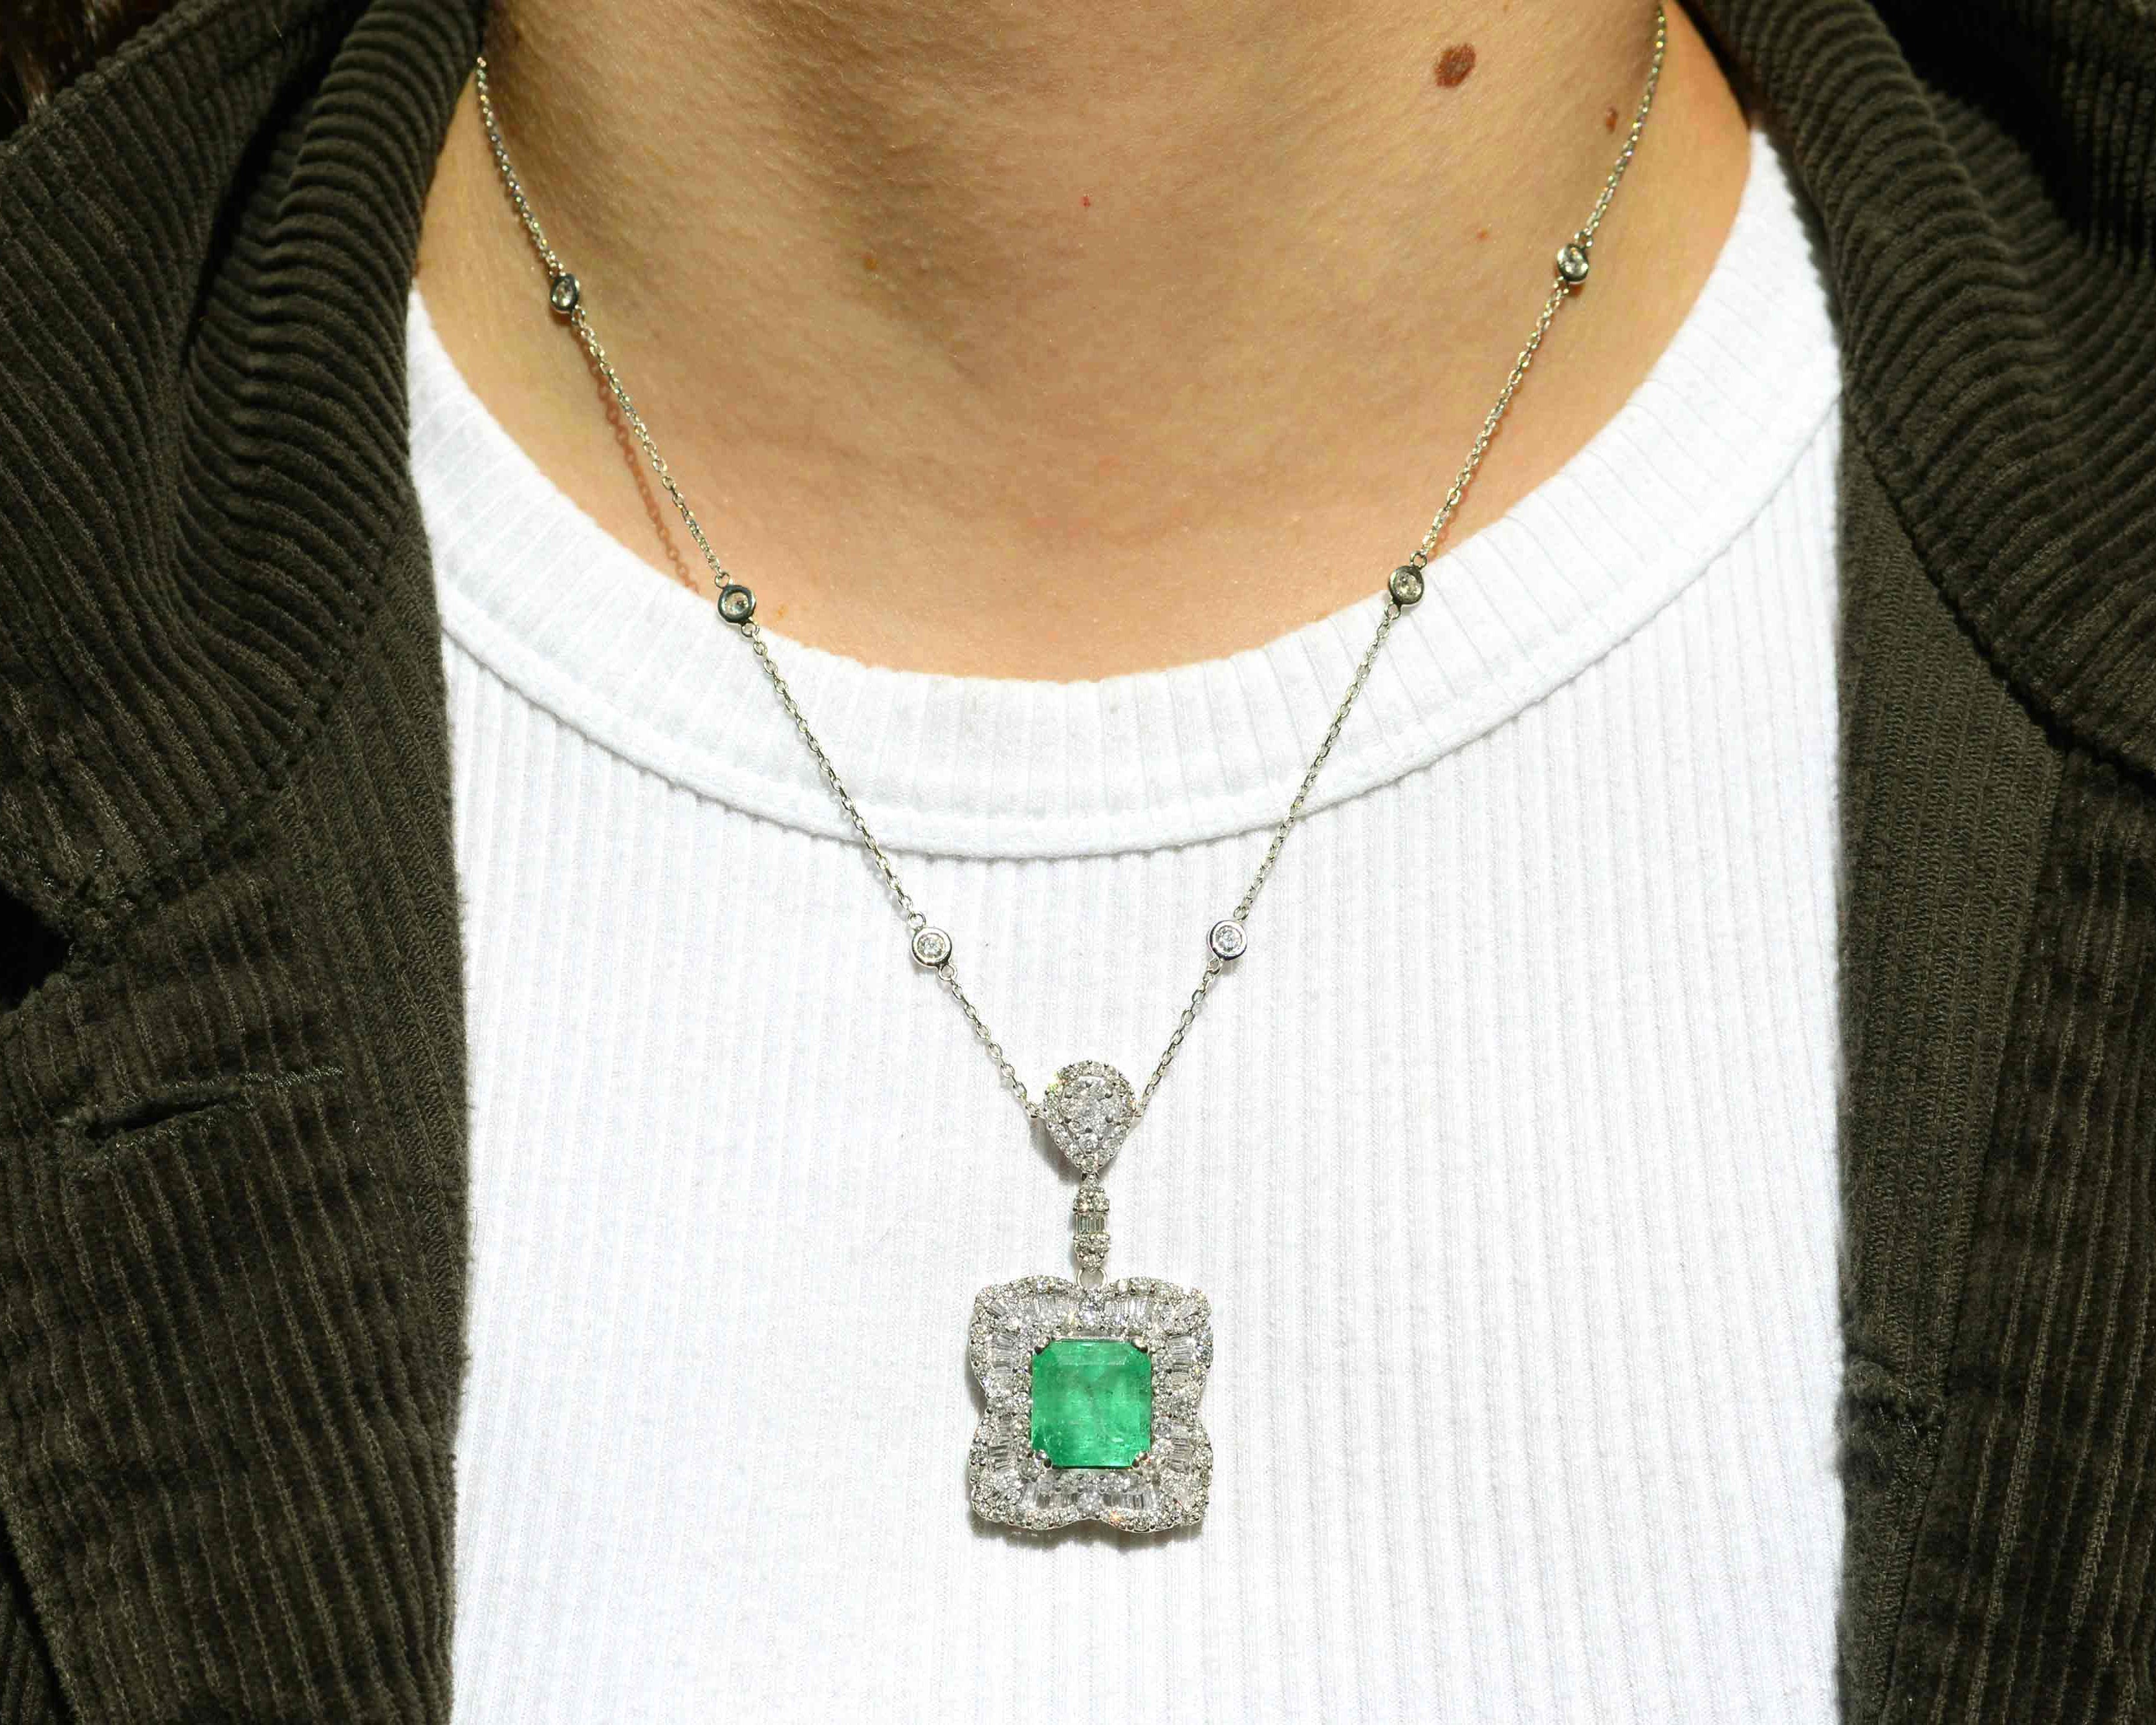 A vivid, grass green 7.90 carat emerald necklace with 3 carats of diamonds.